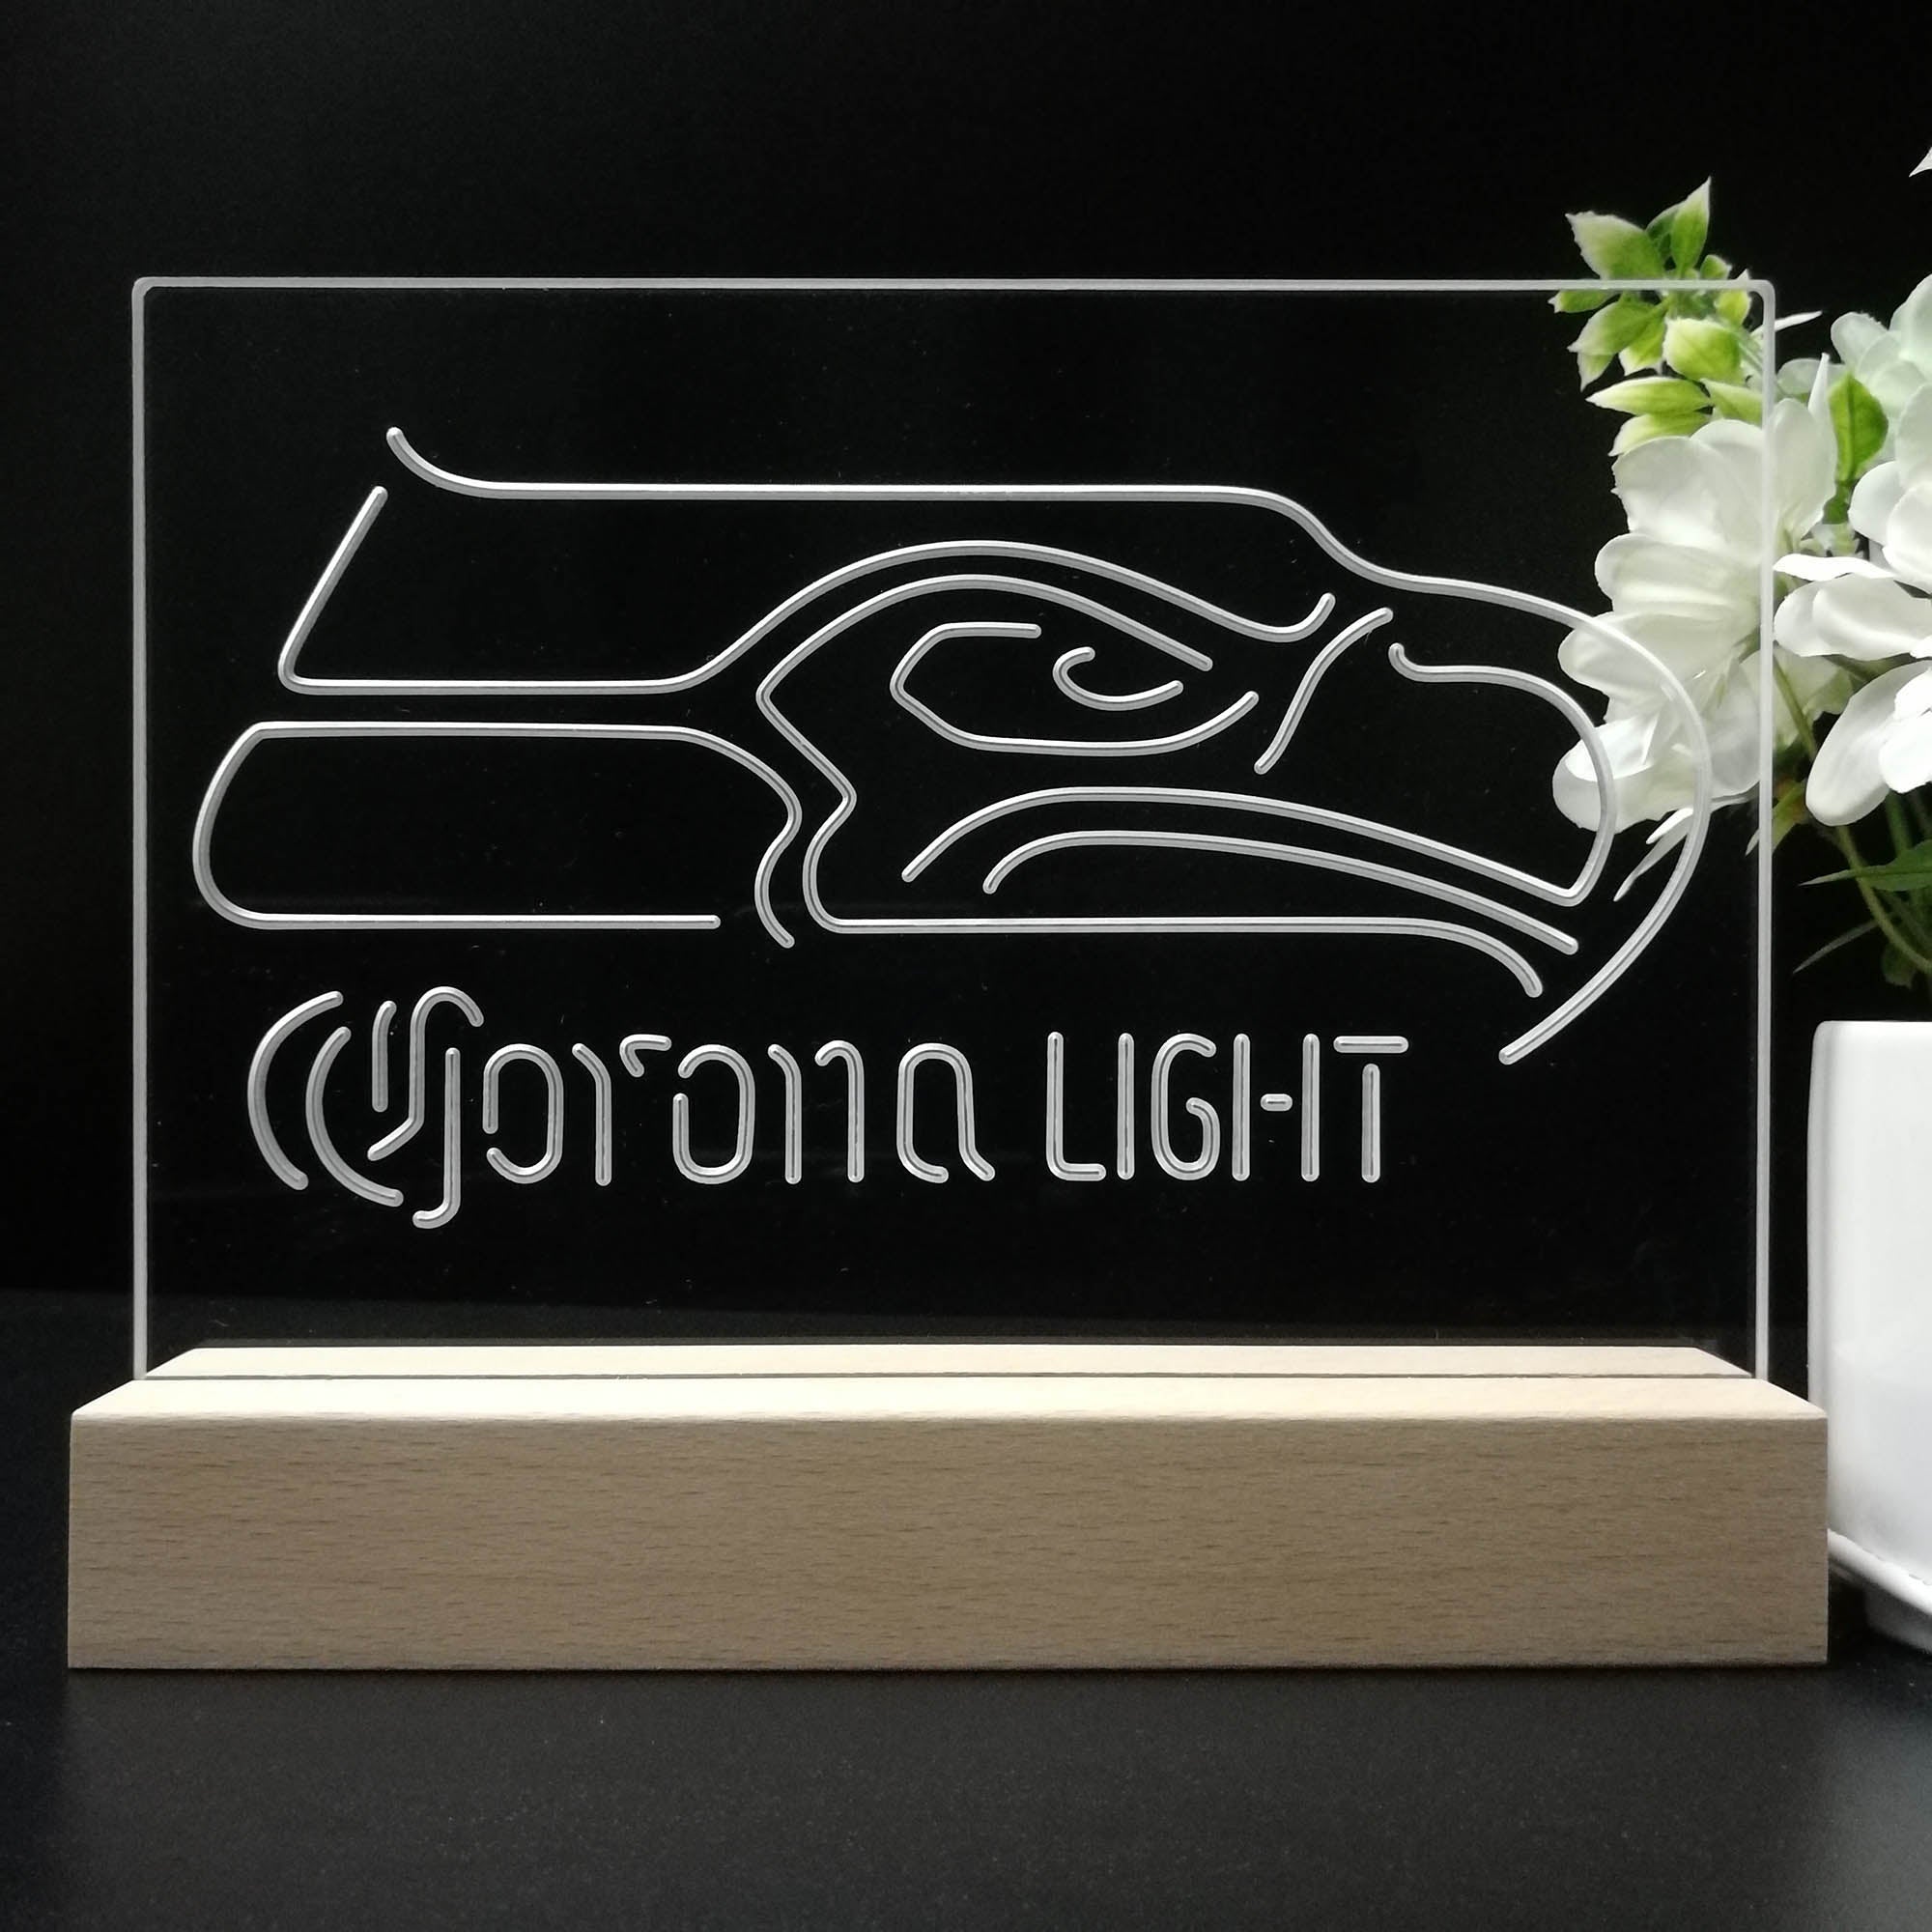 Seattle Seahawks Corona Light Sport Team Night Lamp 3D Illusion Lamp